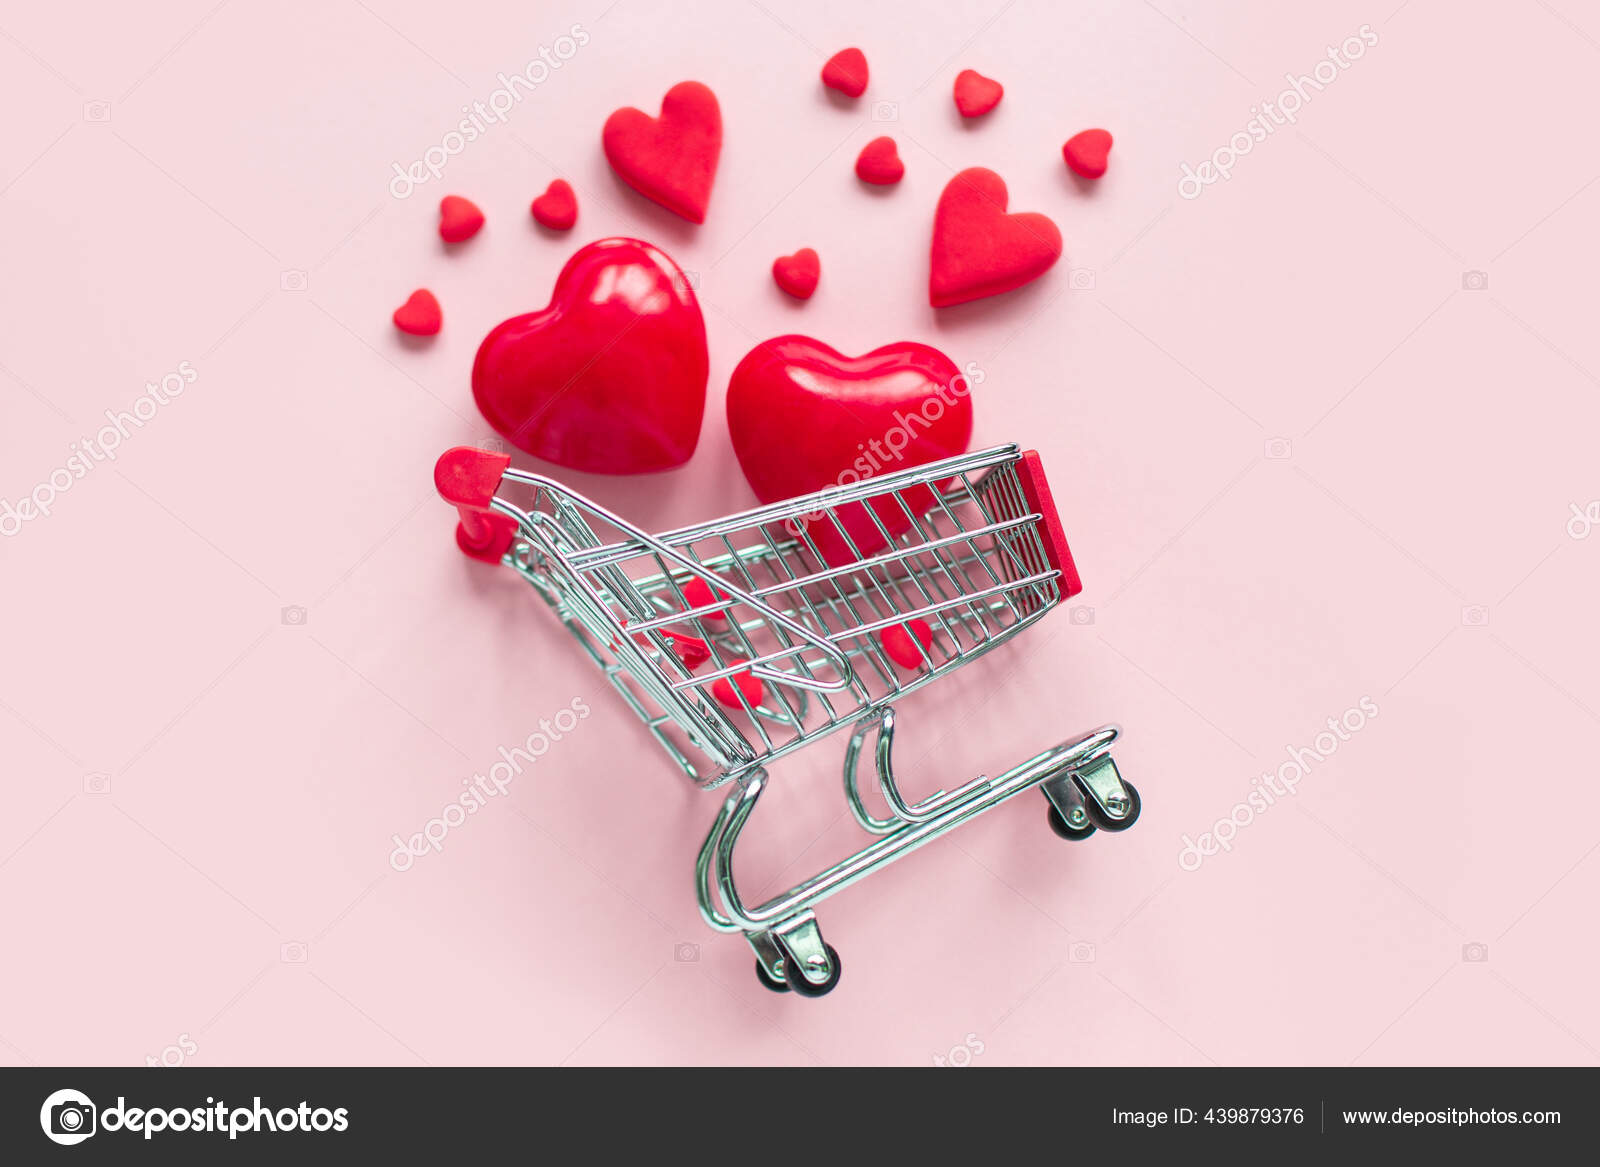 https://st2.depositphotos.com/45179152/43987/i/1600/depositphotos_439879376-stock-photo-valentine-day-online-shopping-shopping.jpg